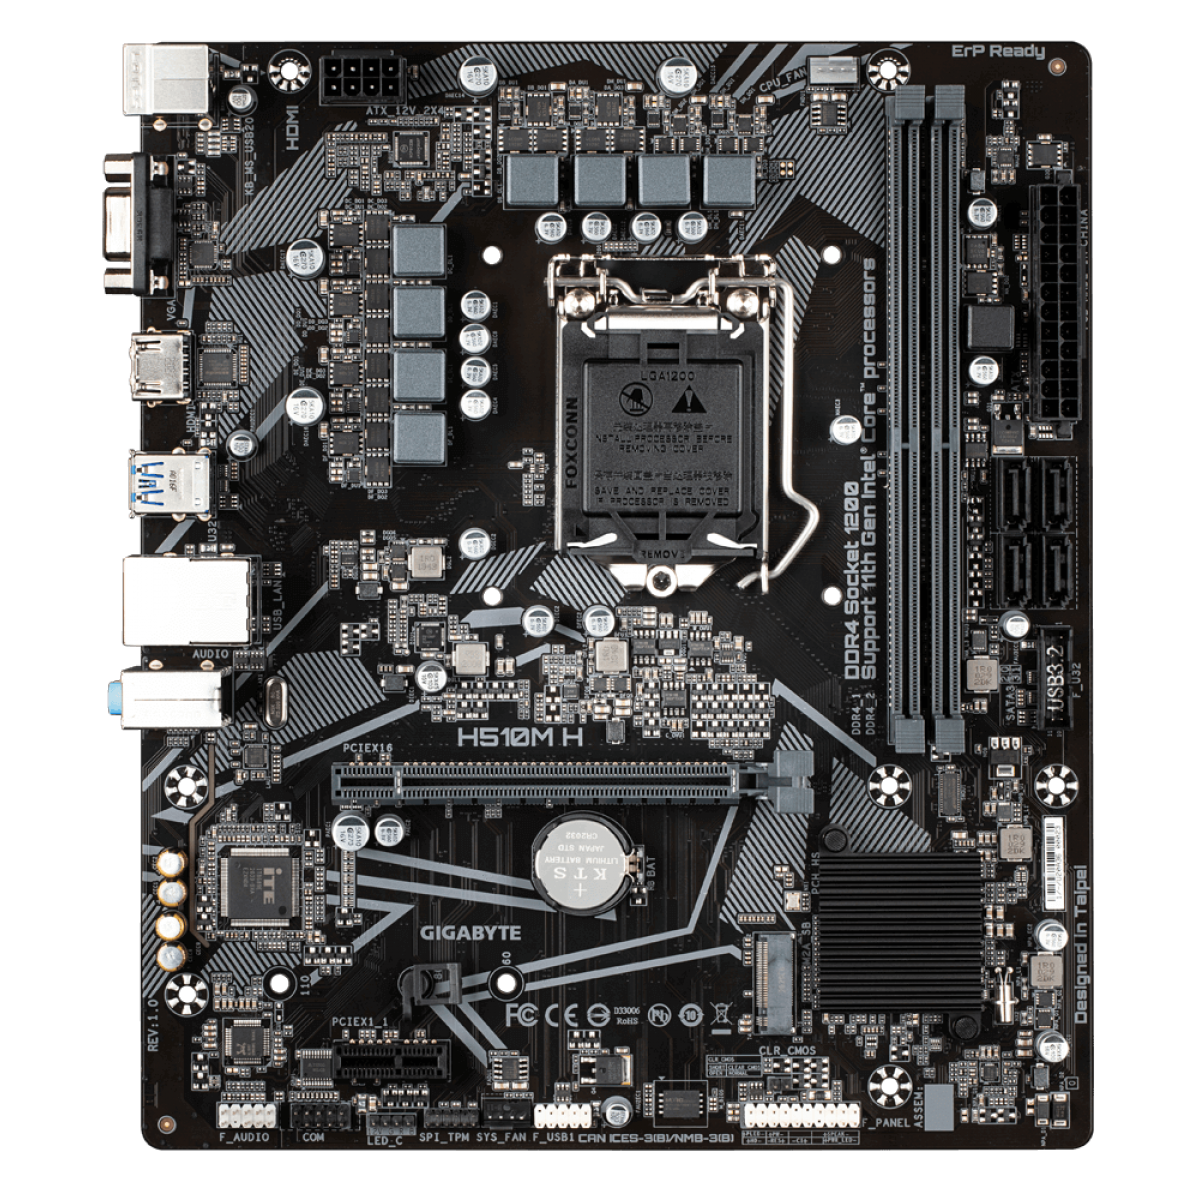 Placa Mãe Gigabyte H510M H, Chipset H510, Intel LGA 1200, mATX, DDR4 - Open Box